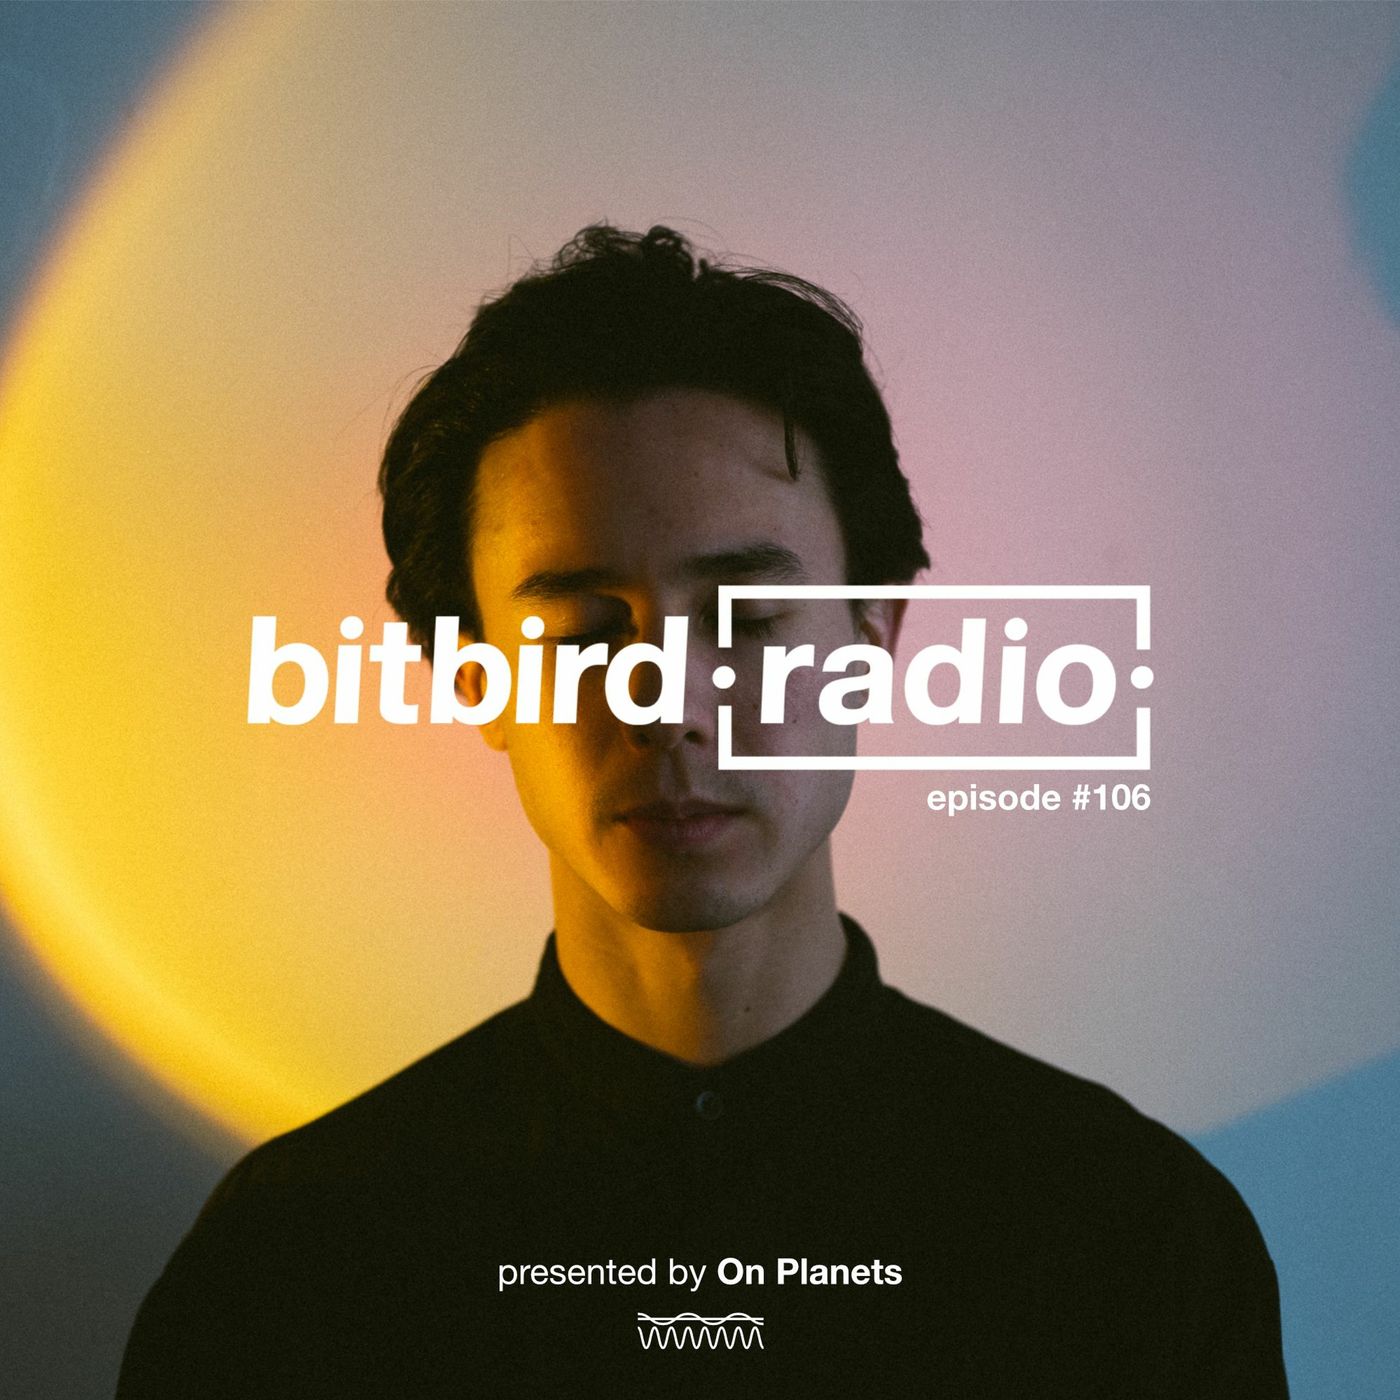 On Planets Presents: bitbird radio #106